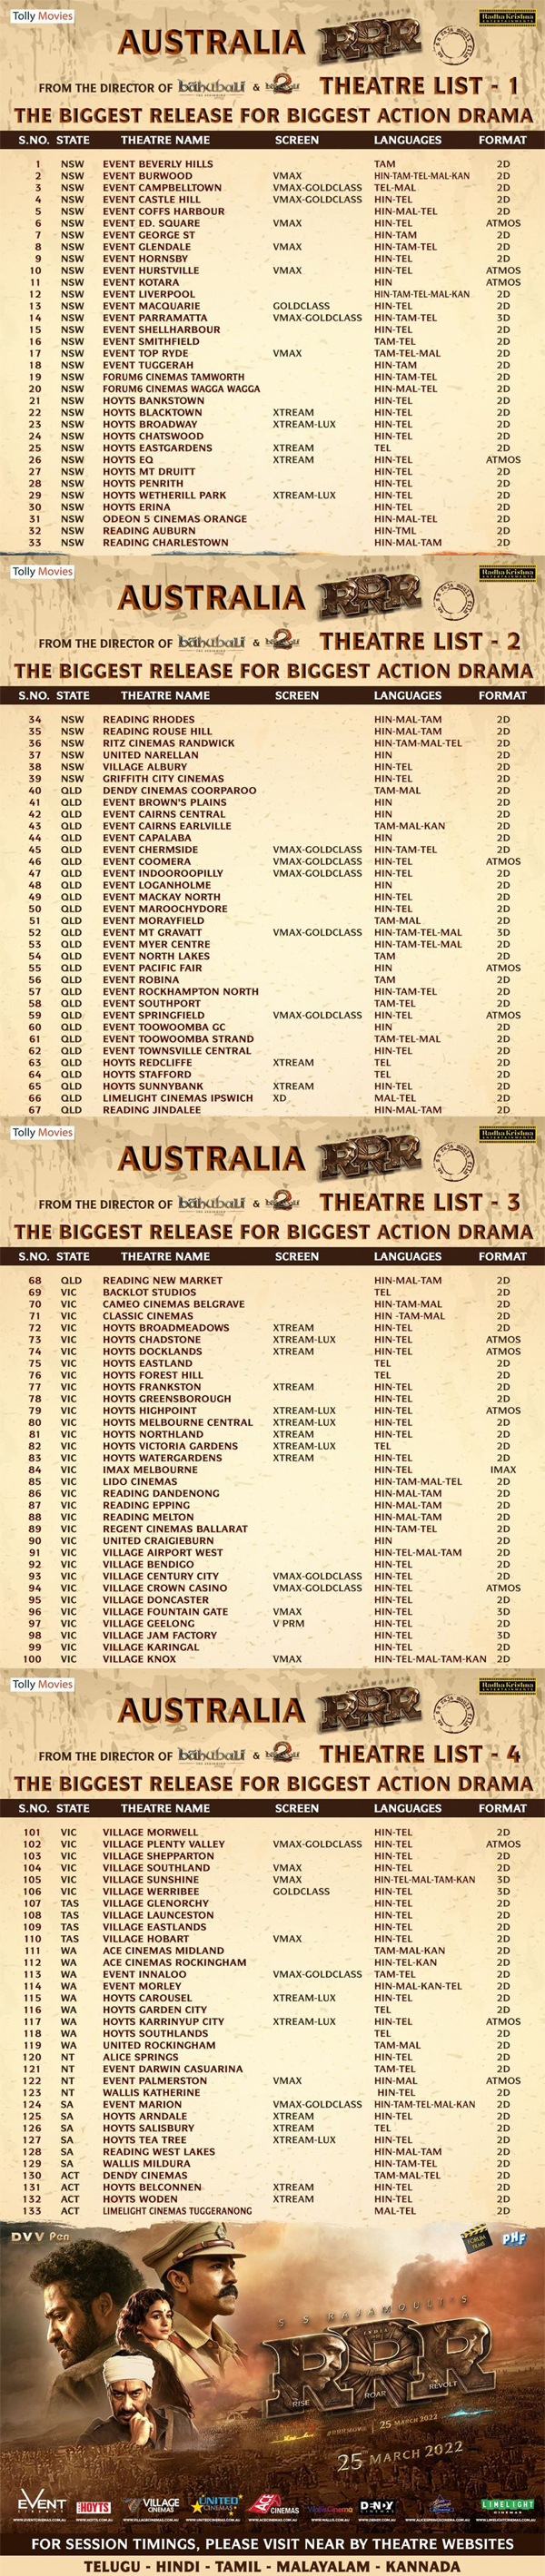 RRR Theatres List in Australia